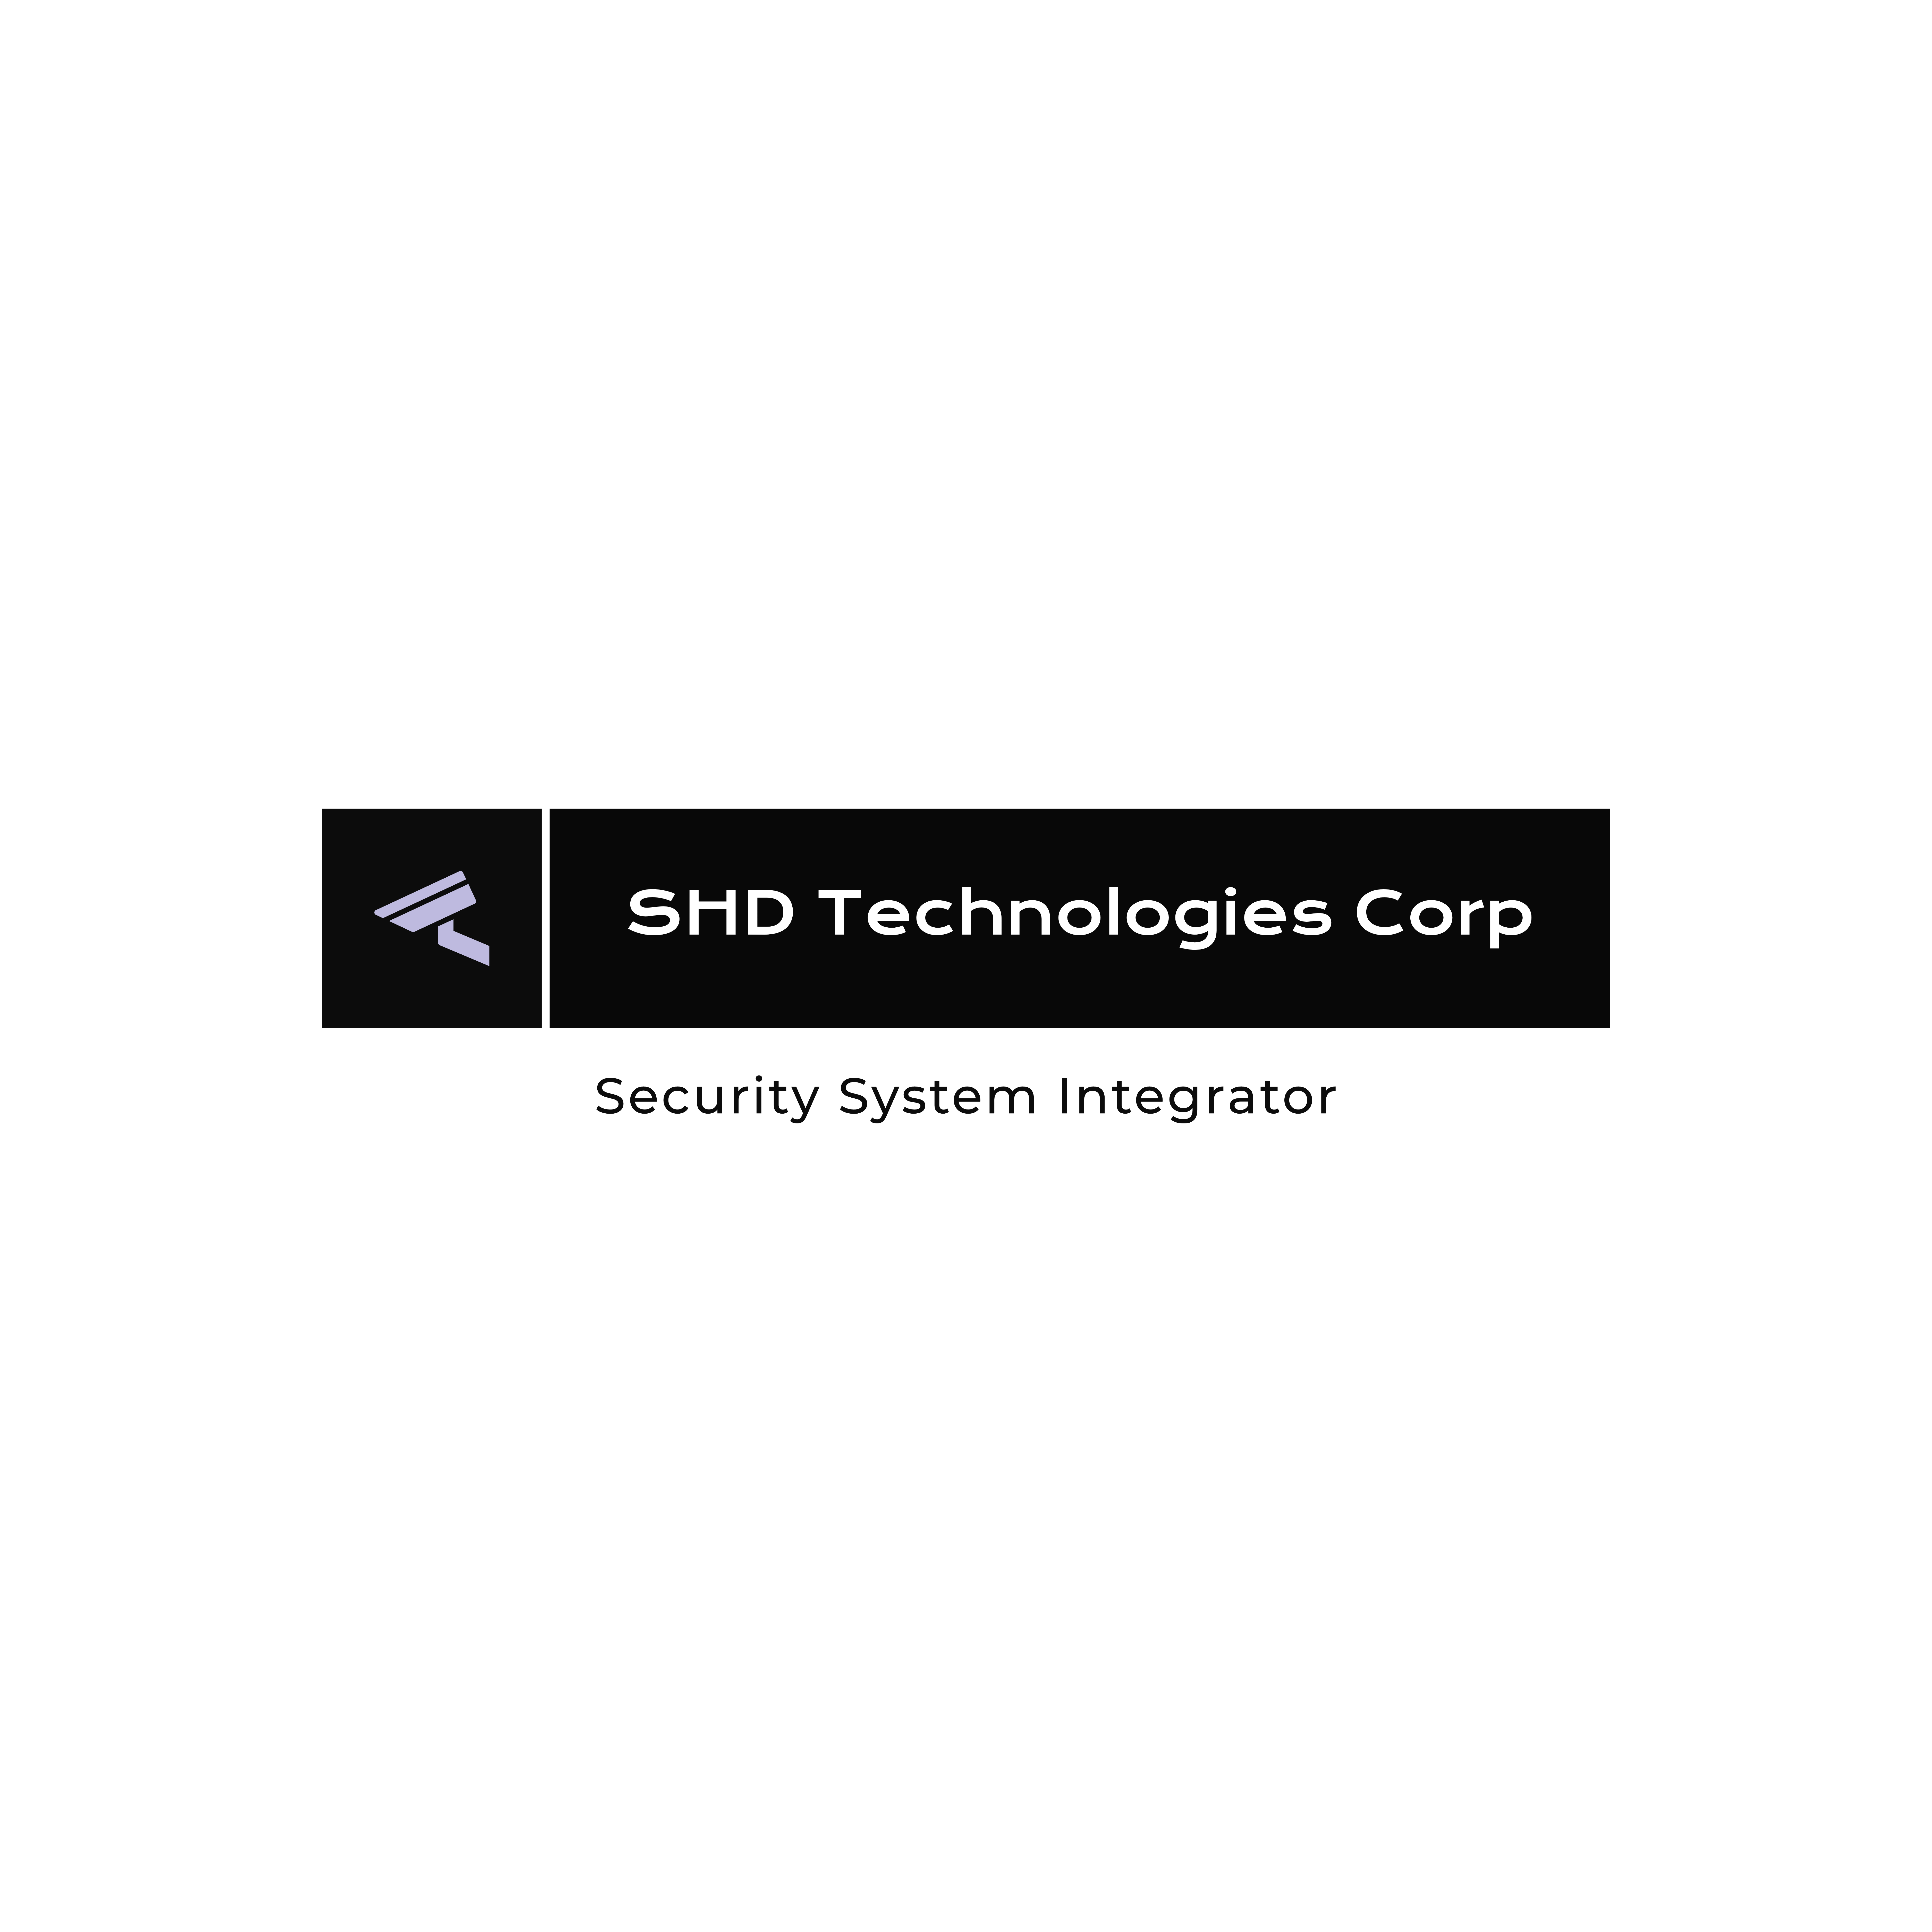 SHD Technologies